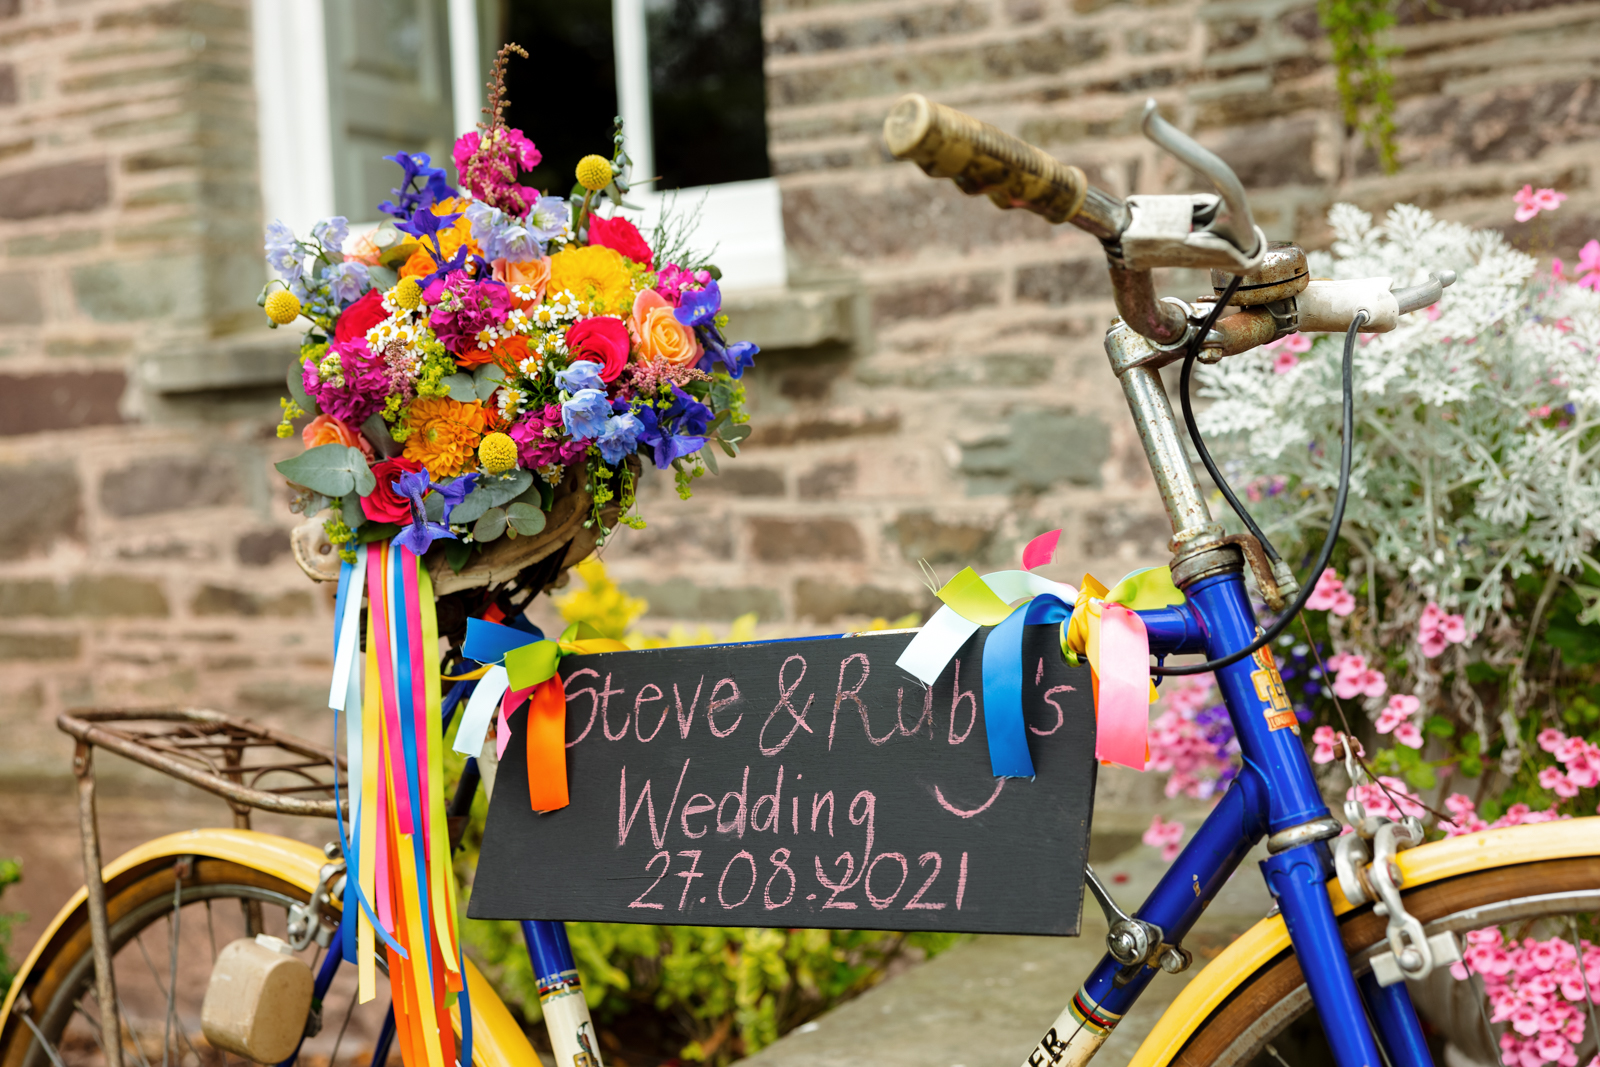 Peterstone Court Wedding Photography - Wedding Bike